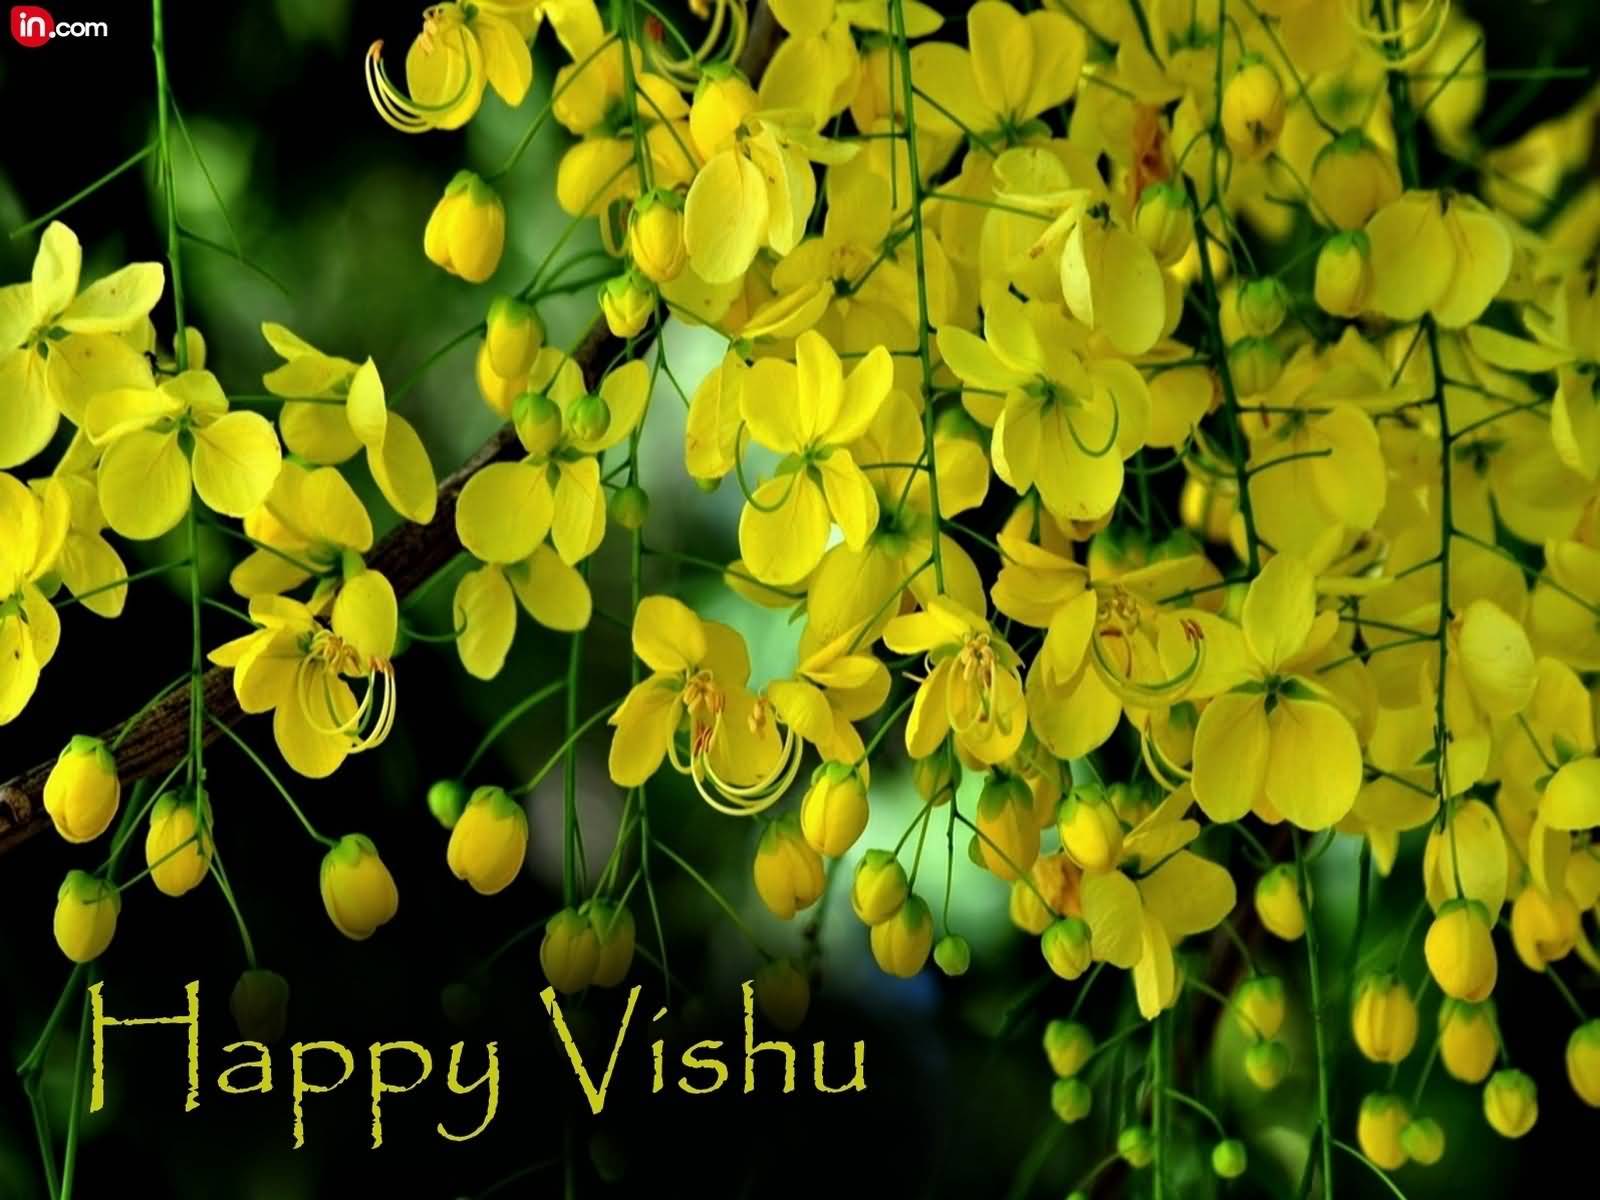 Happy Vishu 2016 Greetings Picture